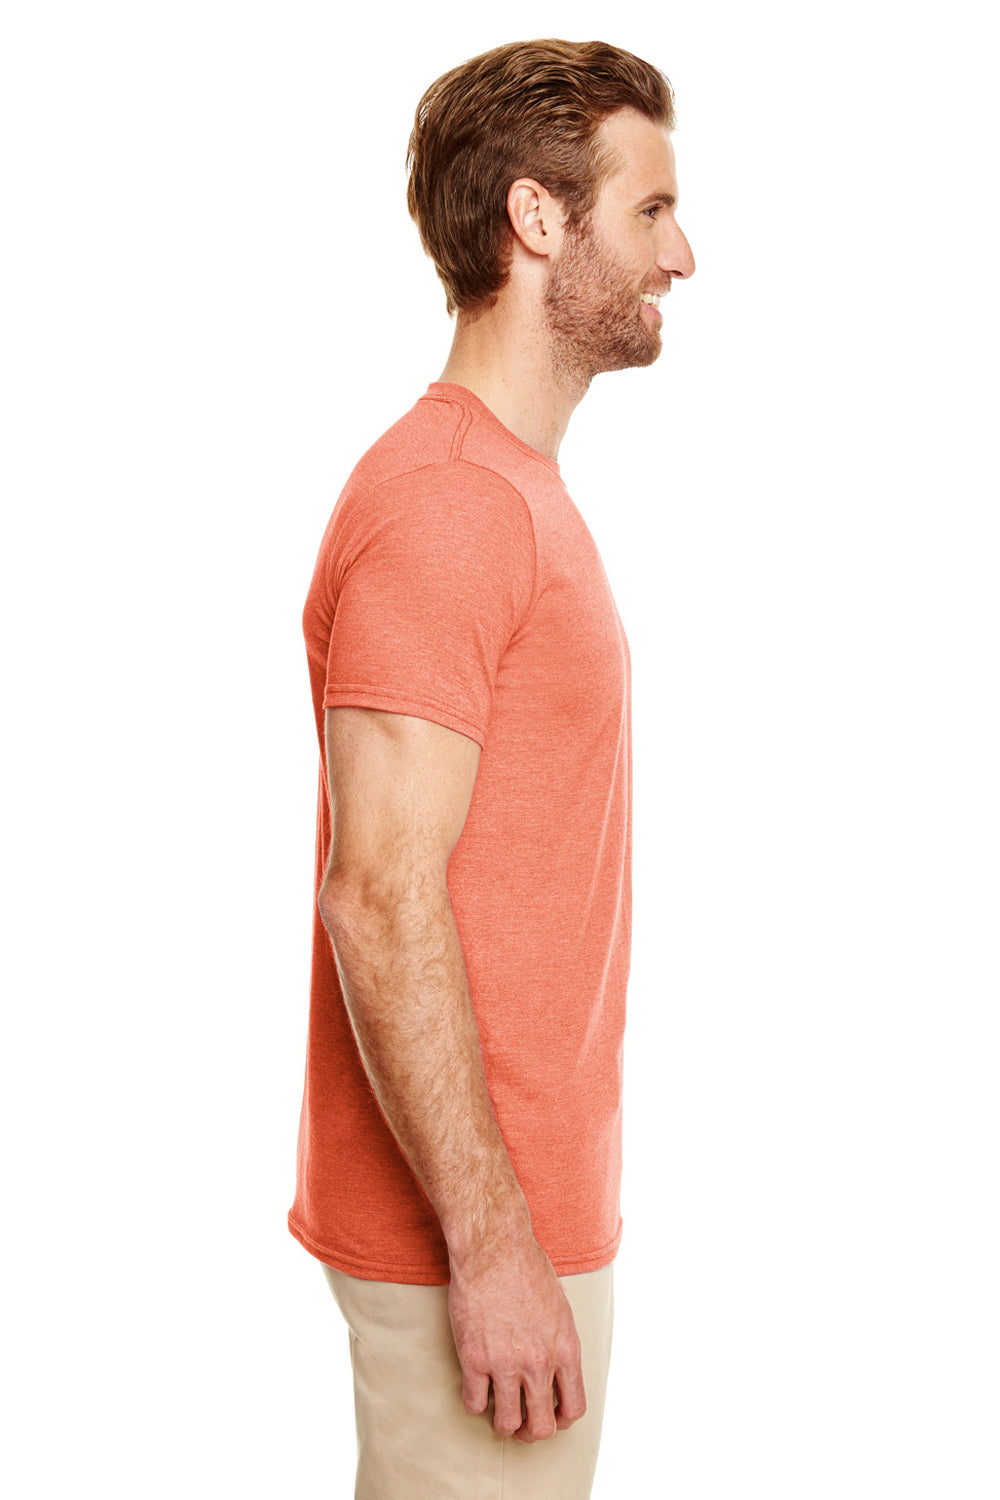 Gildan G640 Mens Softstyle Short Sleeve Crewneck T-Shirt Heather Orange Side